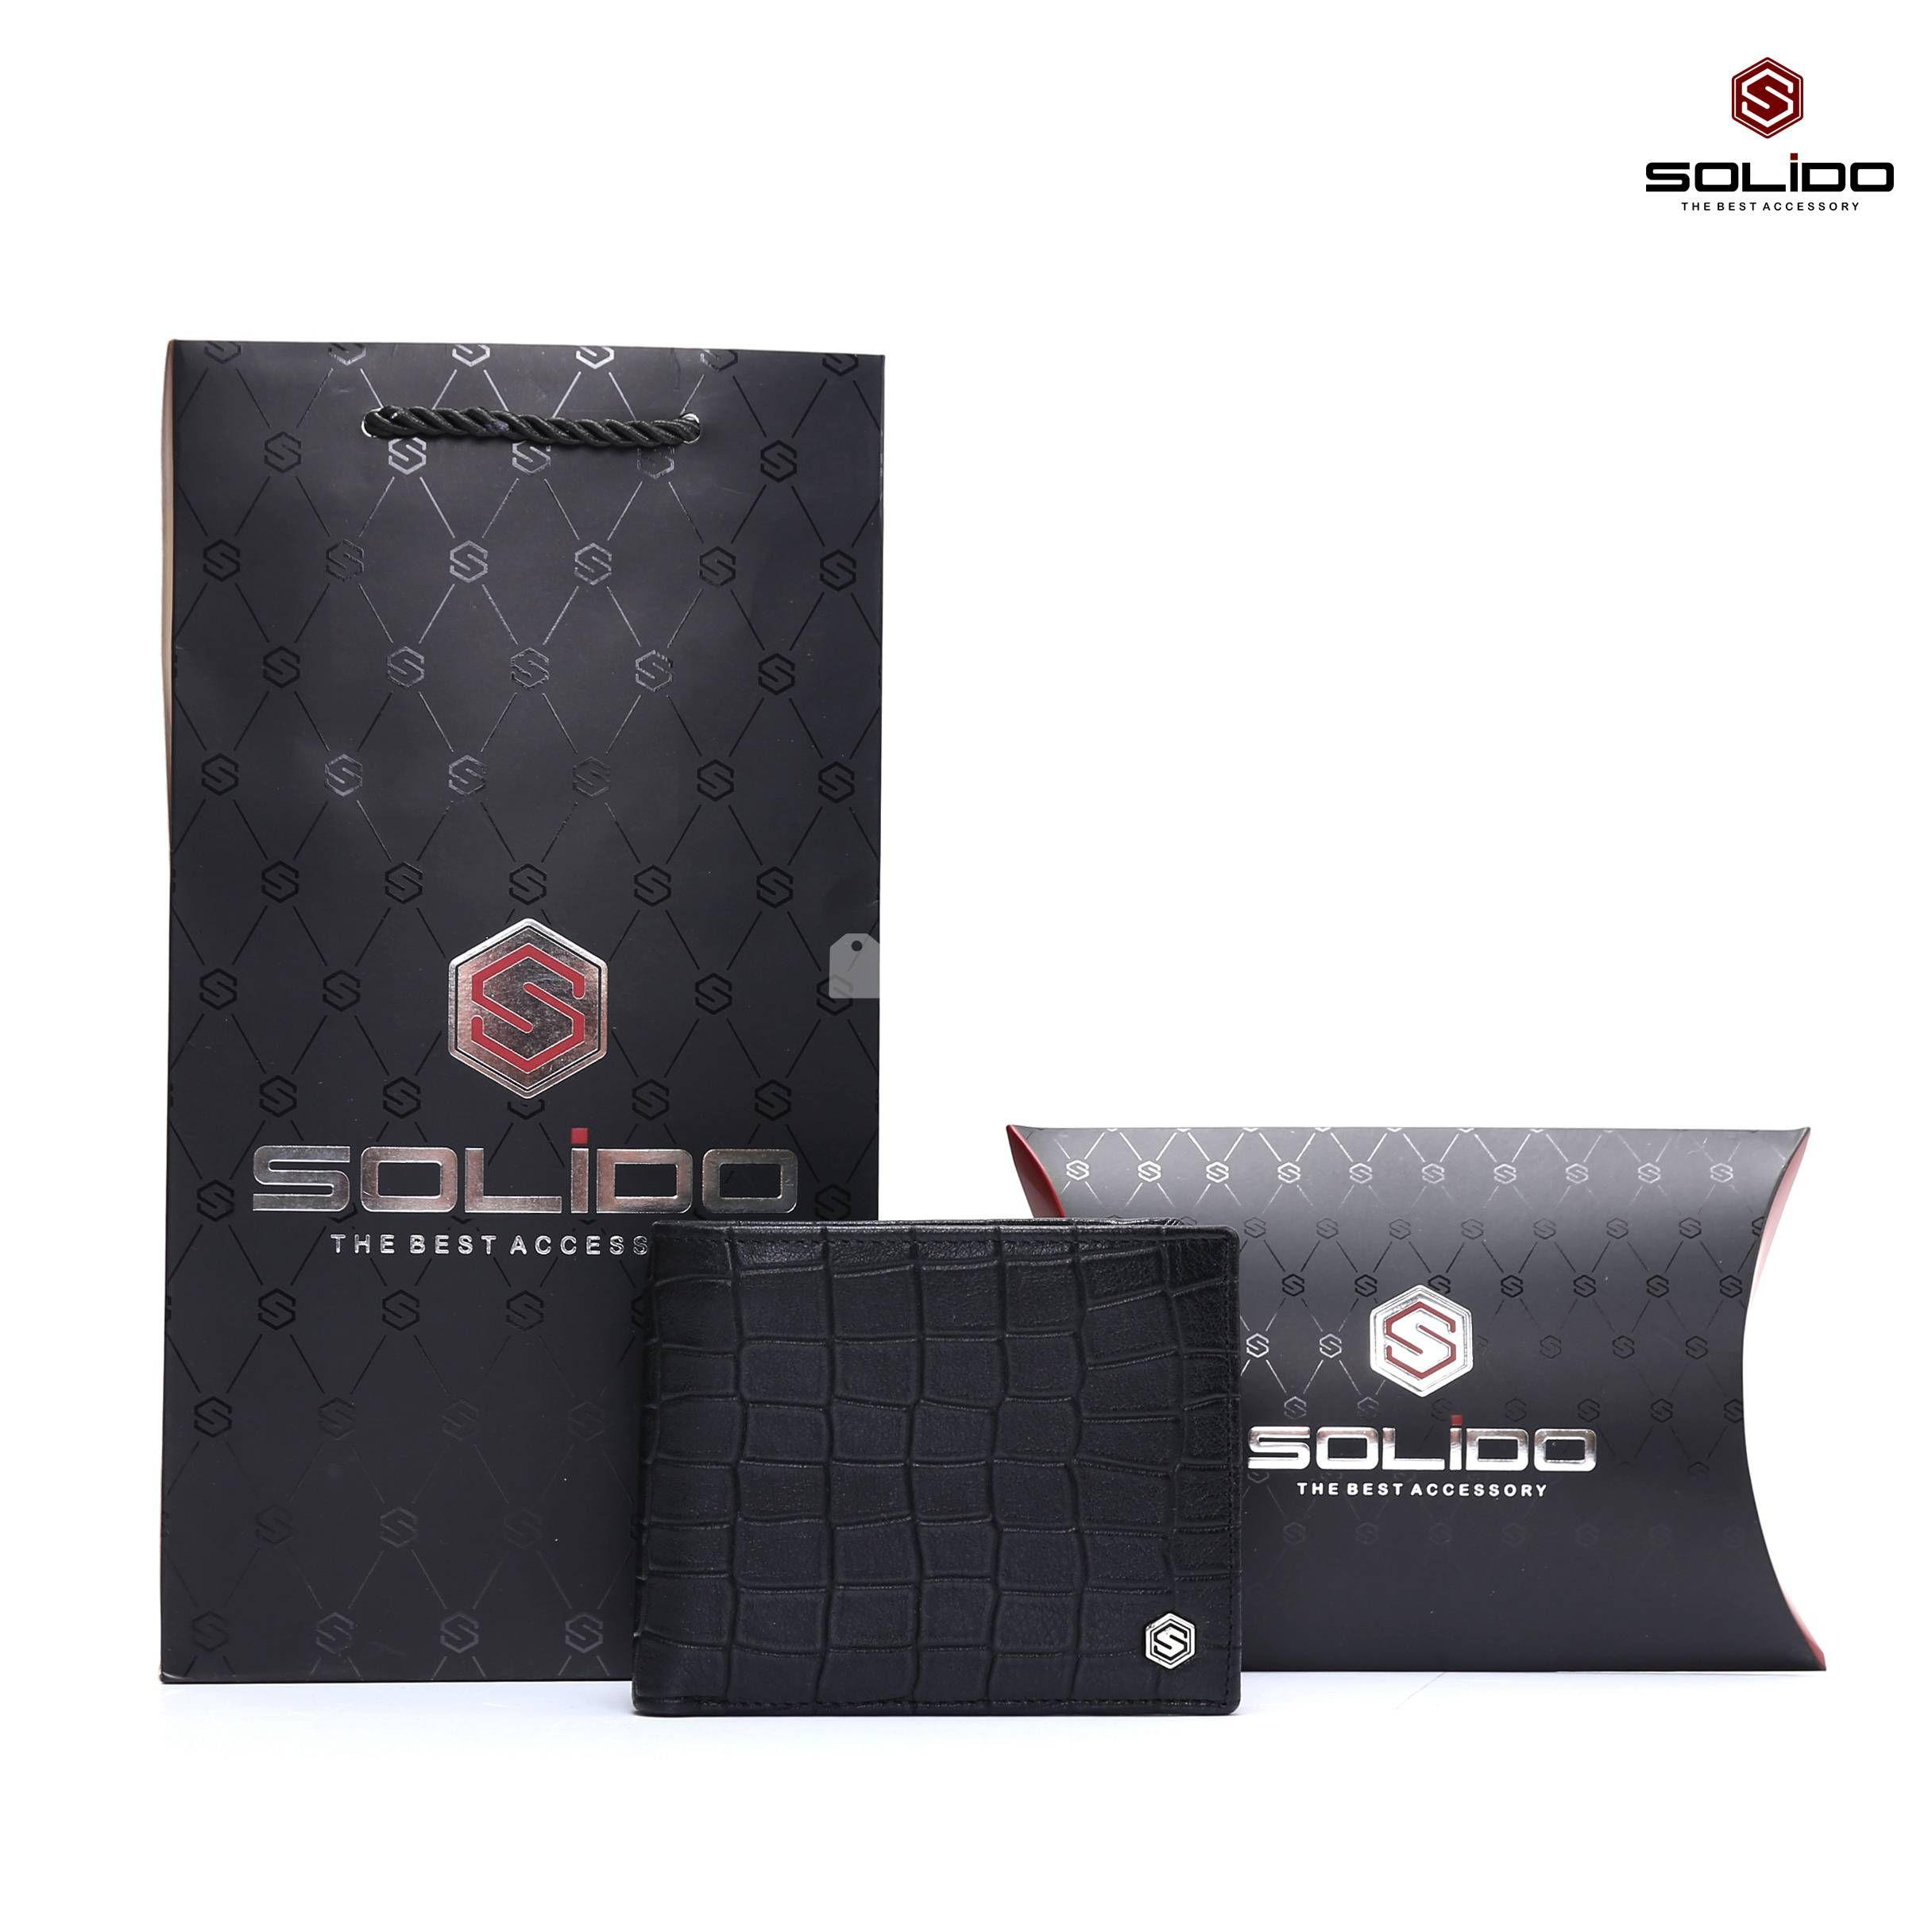 Solido Logo - Wallet Solido 06-208 prices and sales of Baku shops Solido-Shop.az